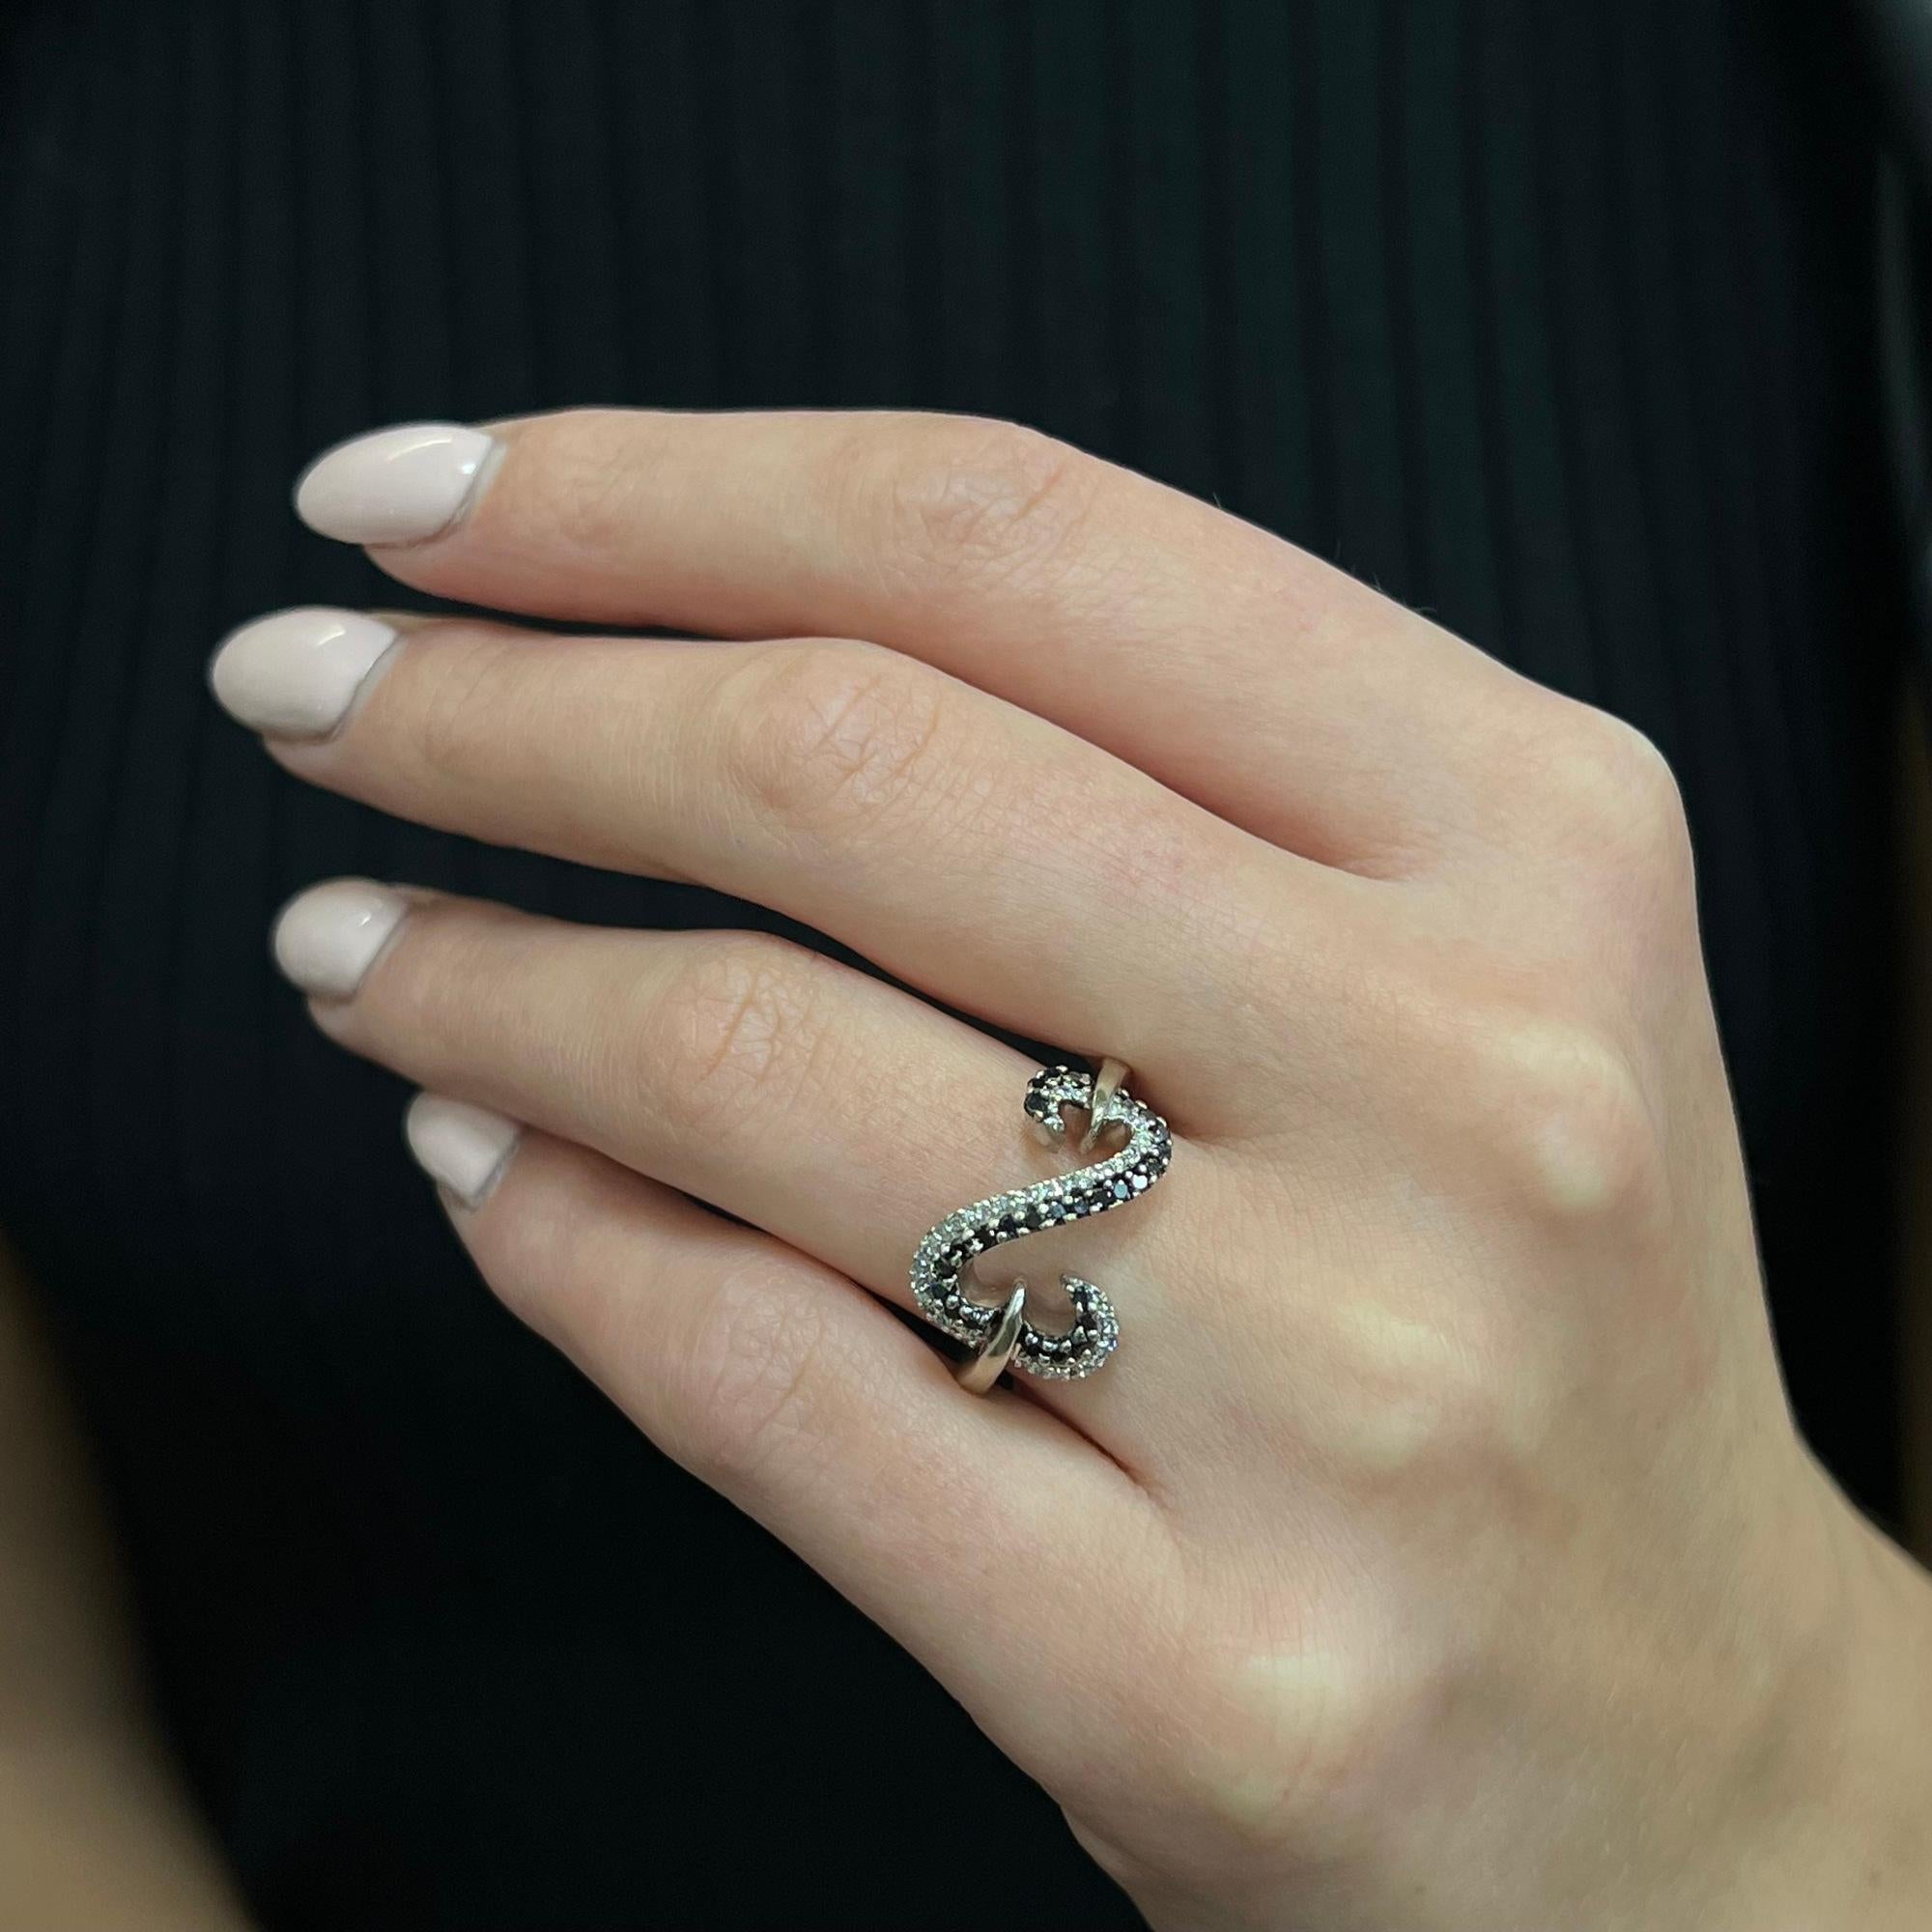 Rachel Koen 0.50Ctw Black & White Diamond Ladies Ring 14K White Gold Size 6.75 For Sale 1